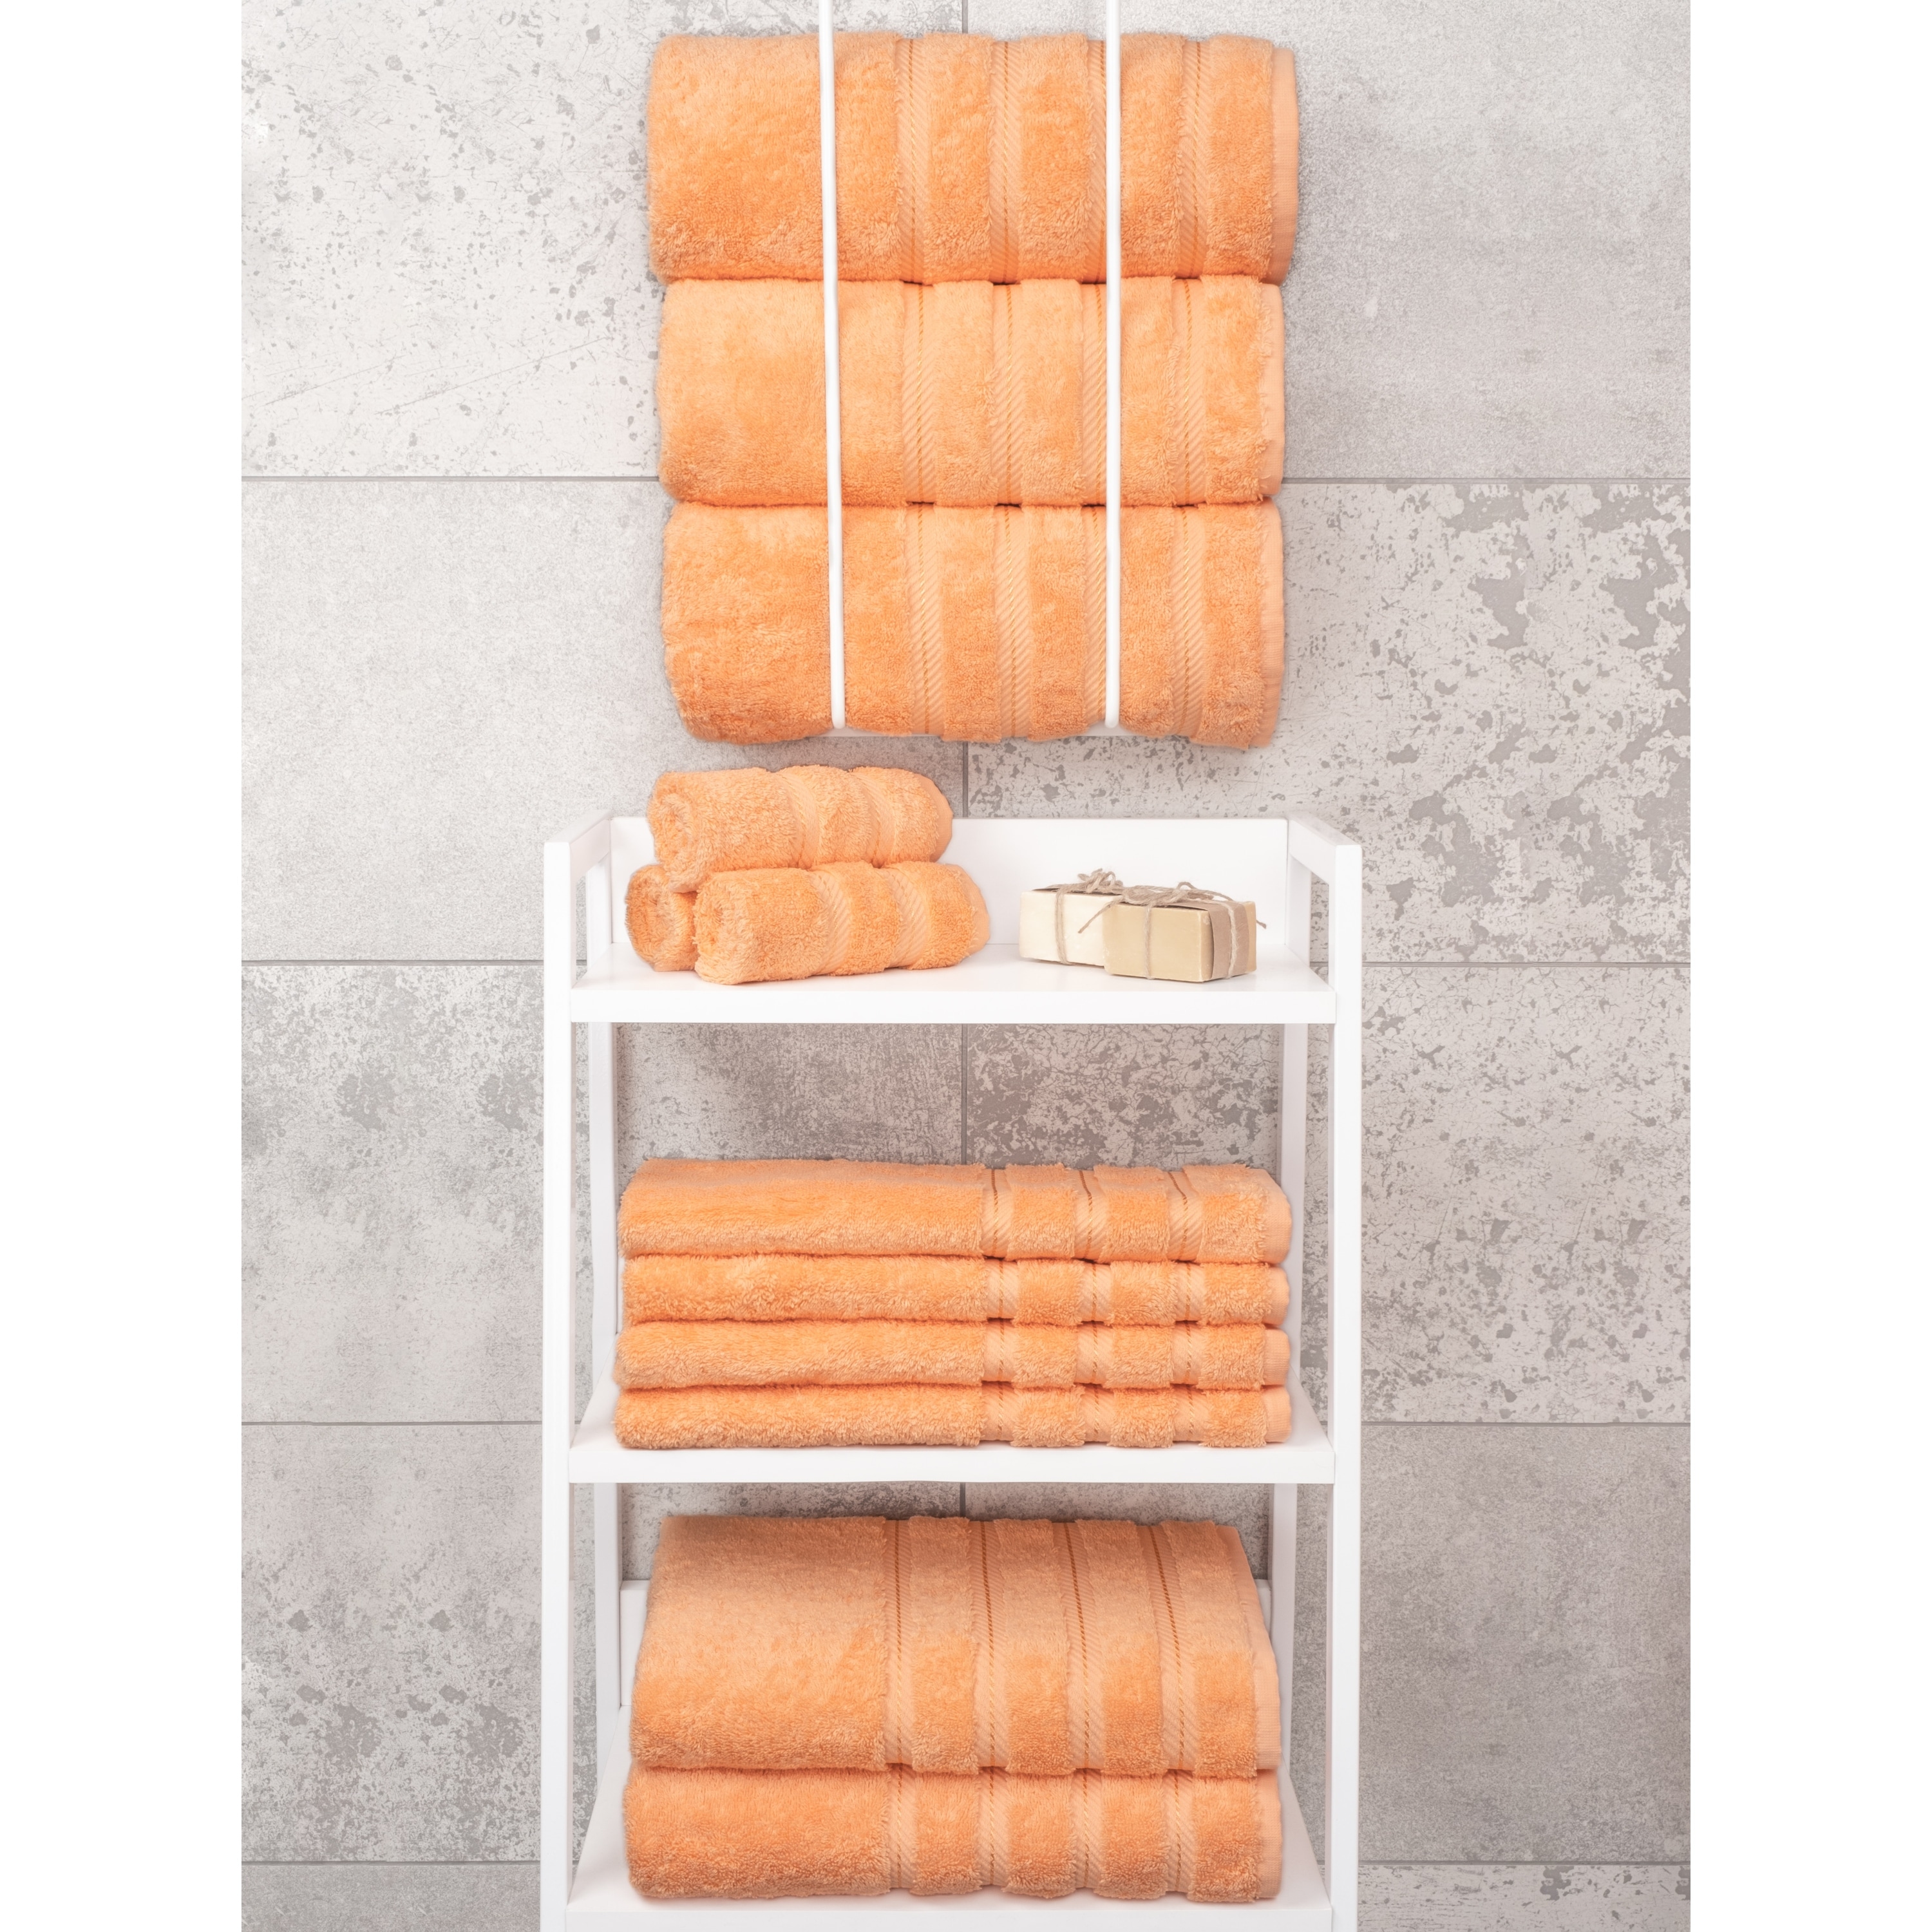 American Soft Linen Bath Towel Set, 4 Piece 100% Turkish Cotton Bath  Towels, 27x54 inches Super Soft Towels for Bathroom, Sage Green  Edis4BathTurqE130 - The Home Depot